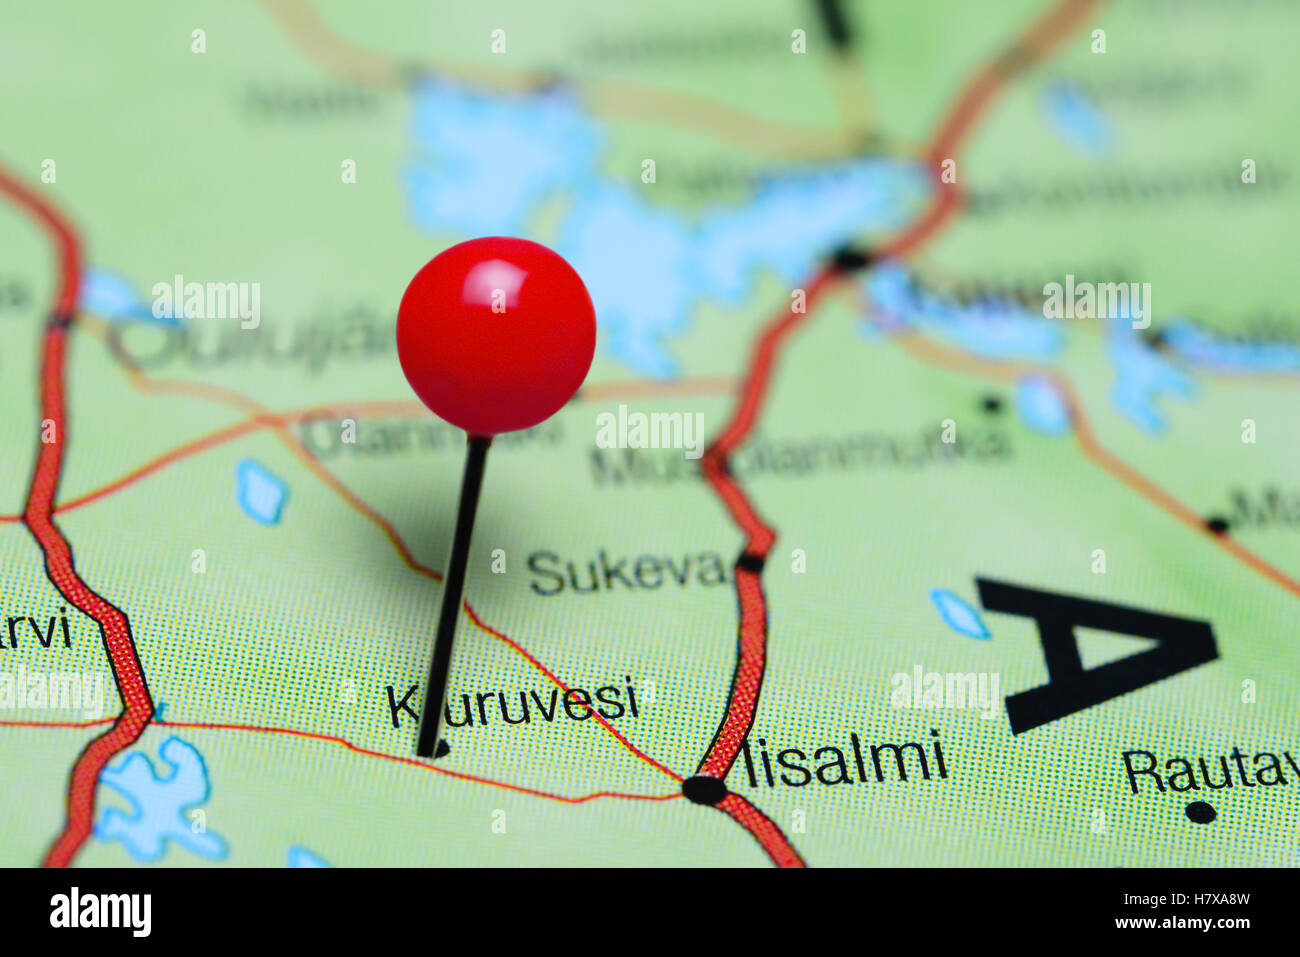 Kiuruvesi pinned on a map of Finland Stock Photo